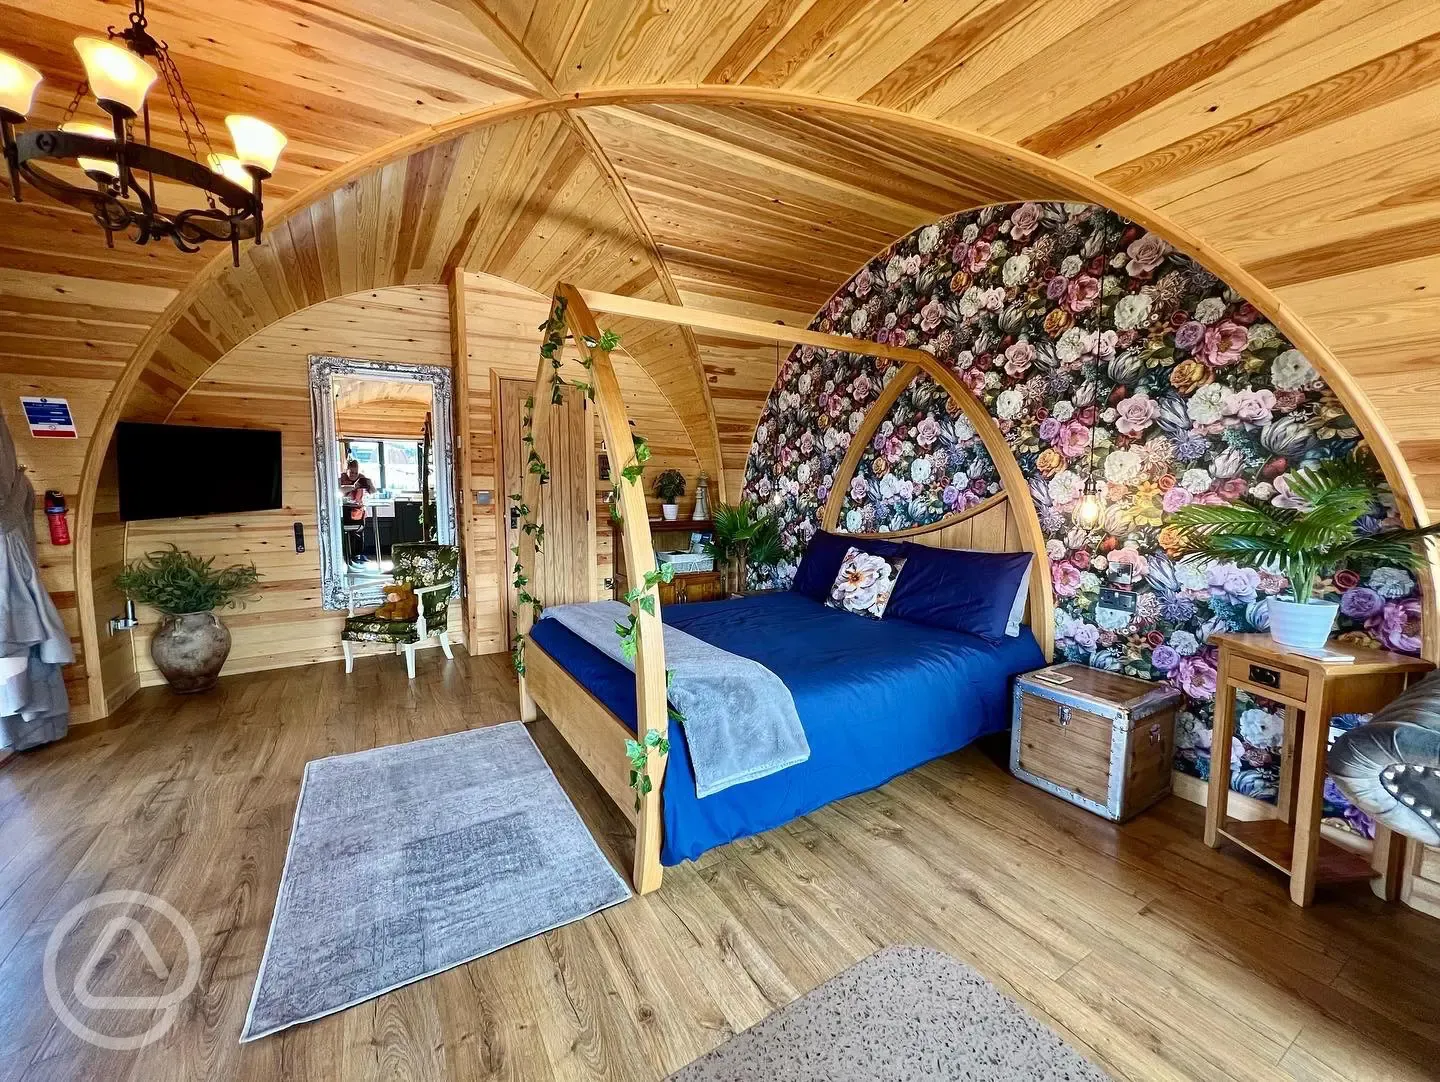 Pod interior double bed